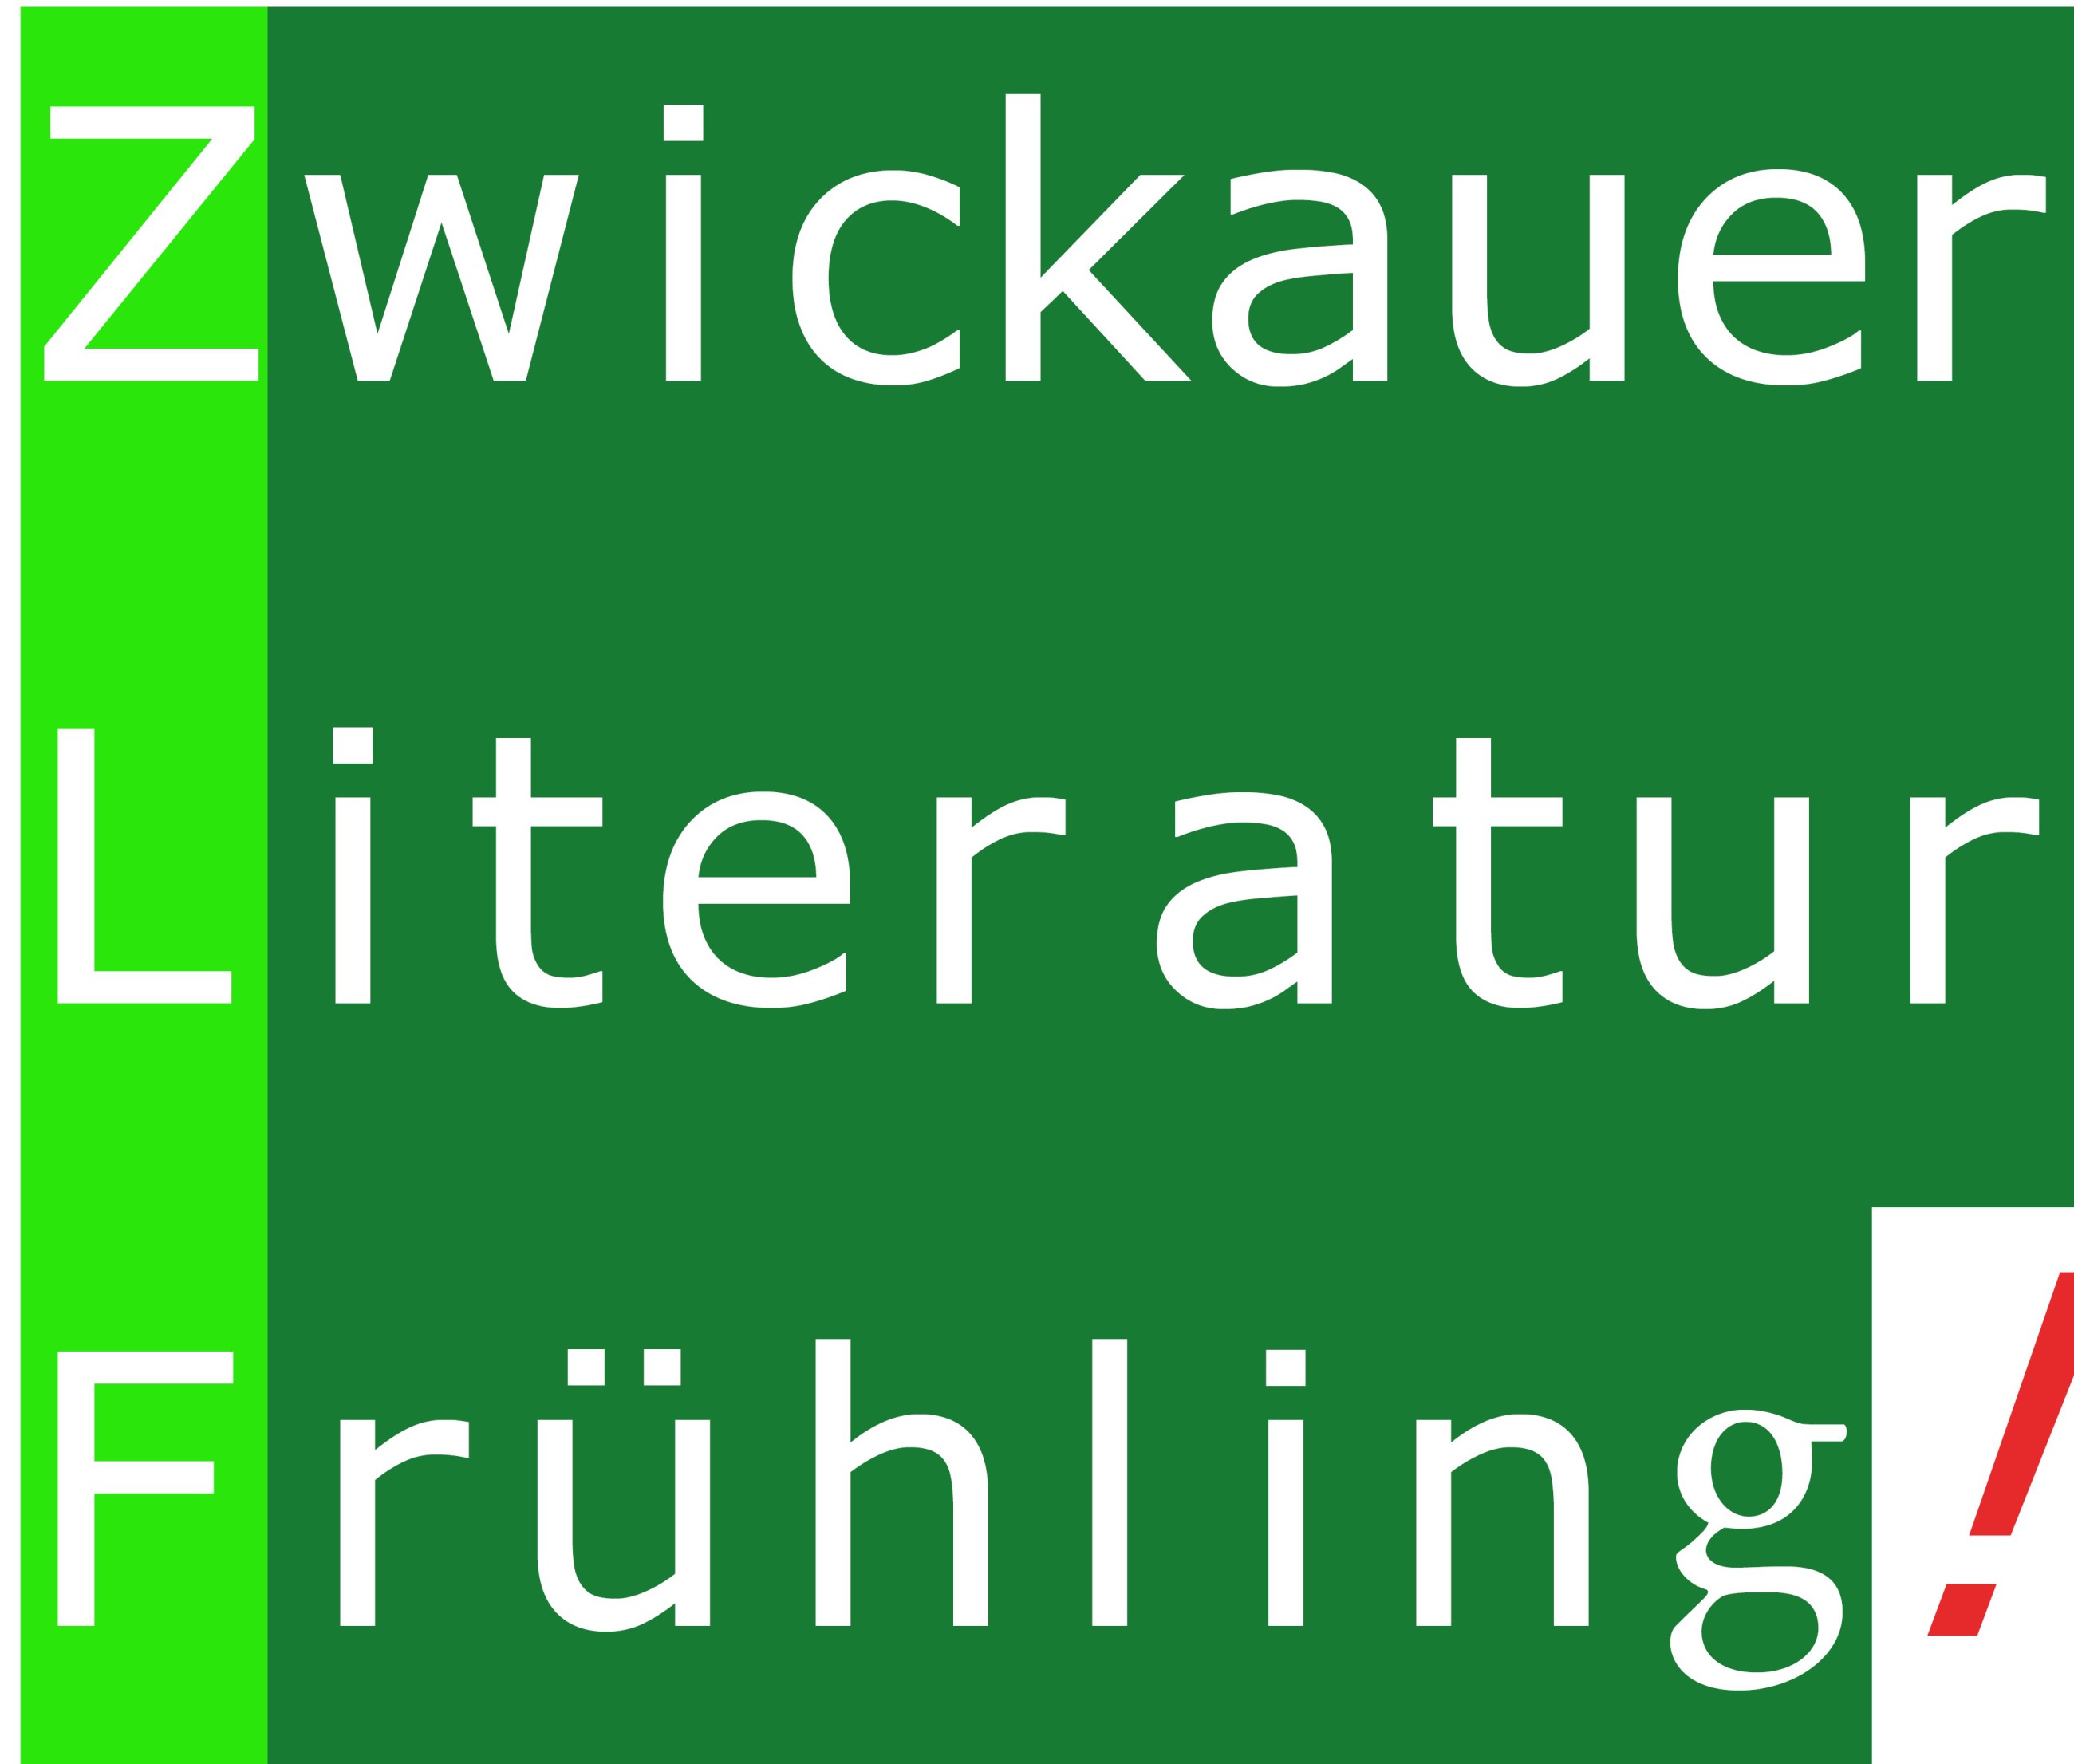 (c) Zwickauer-literaturfruehling.de